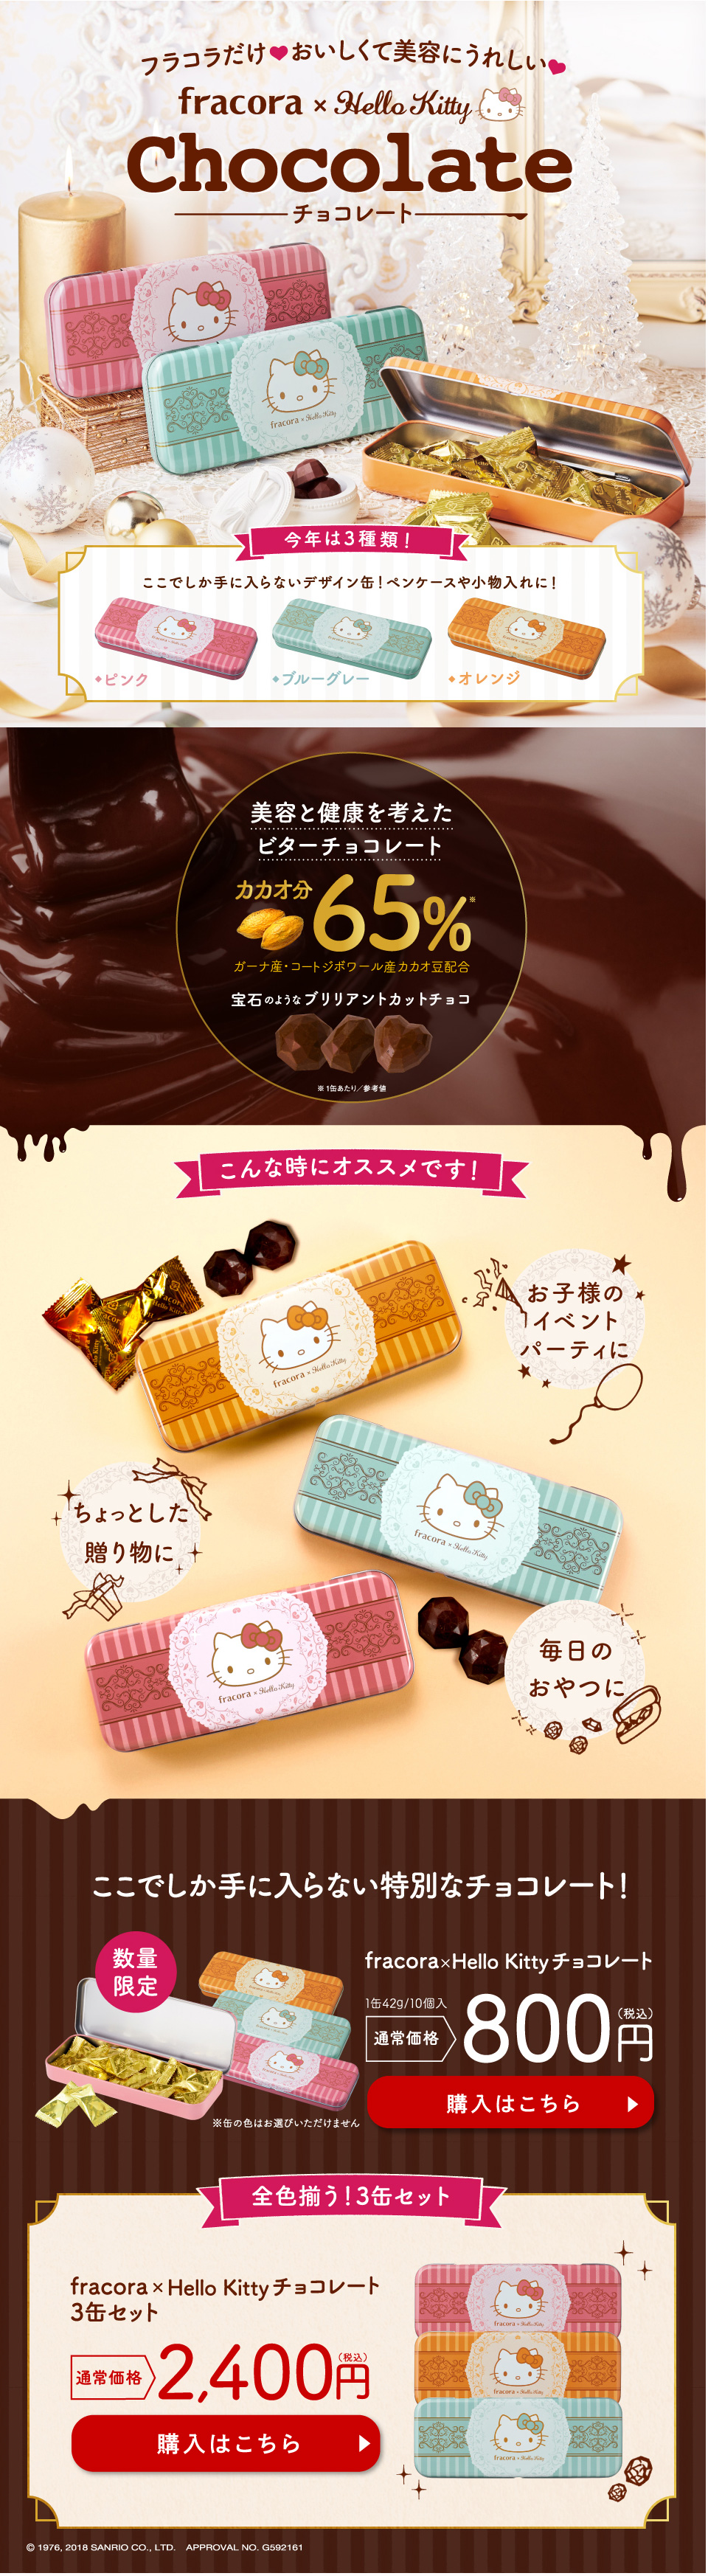 fracora × Hello Kitty チョコレート 3色セット_pc_1